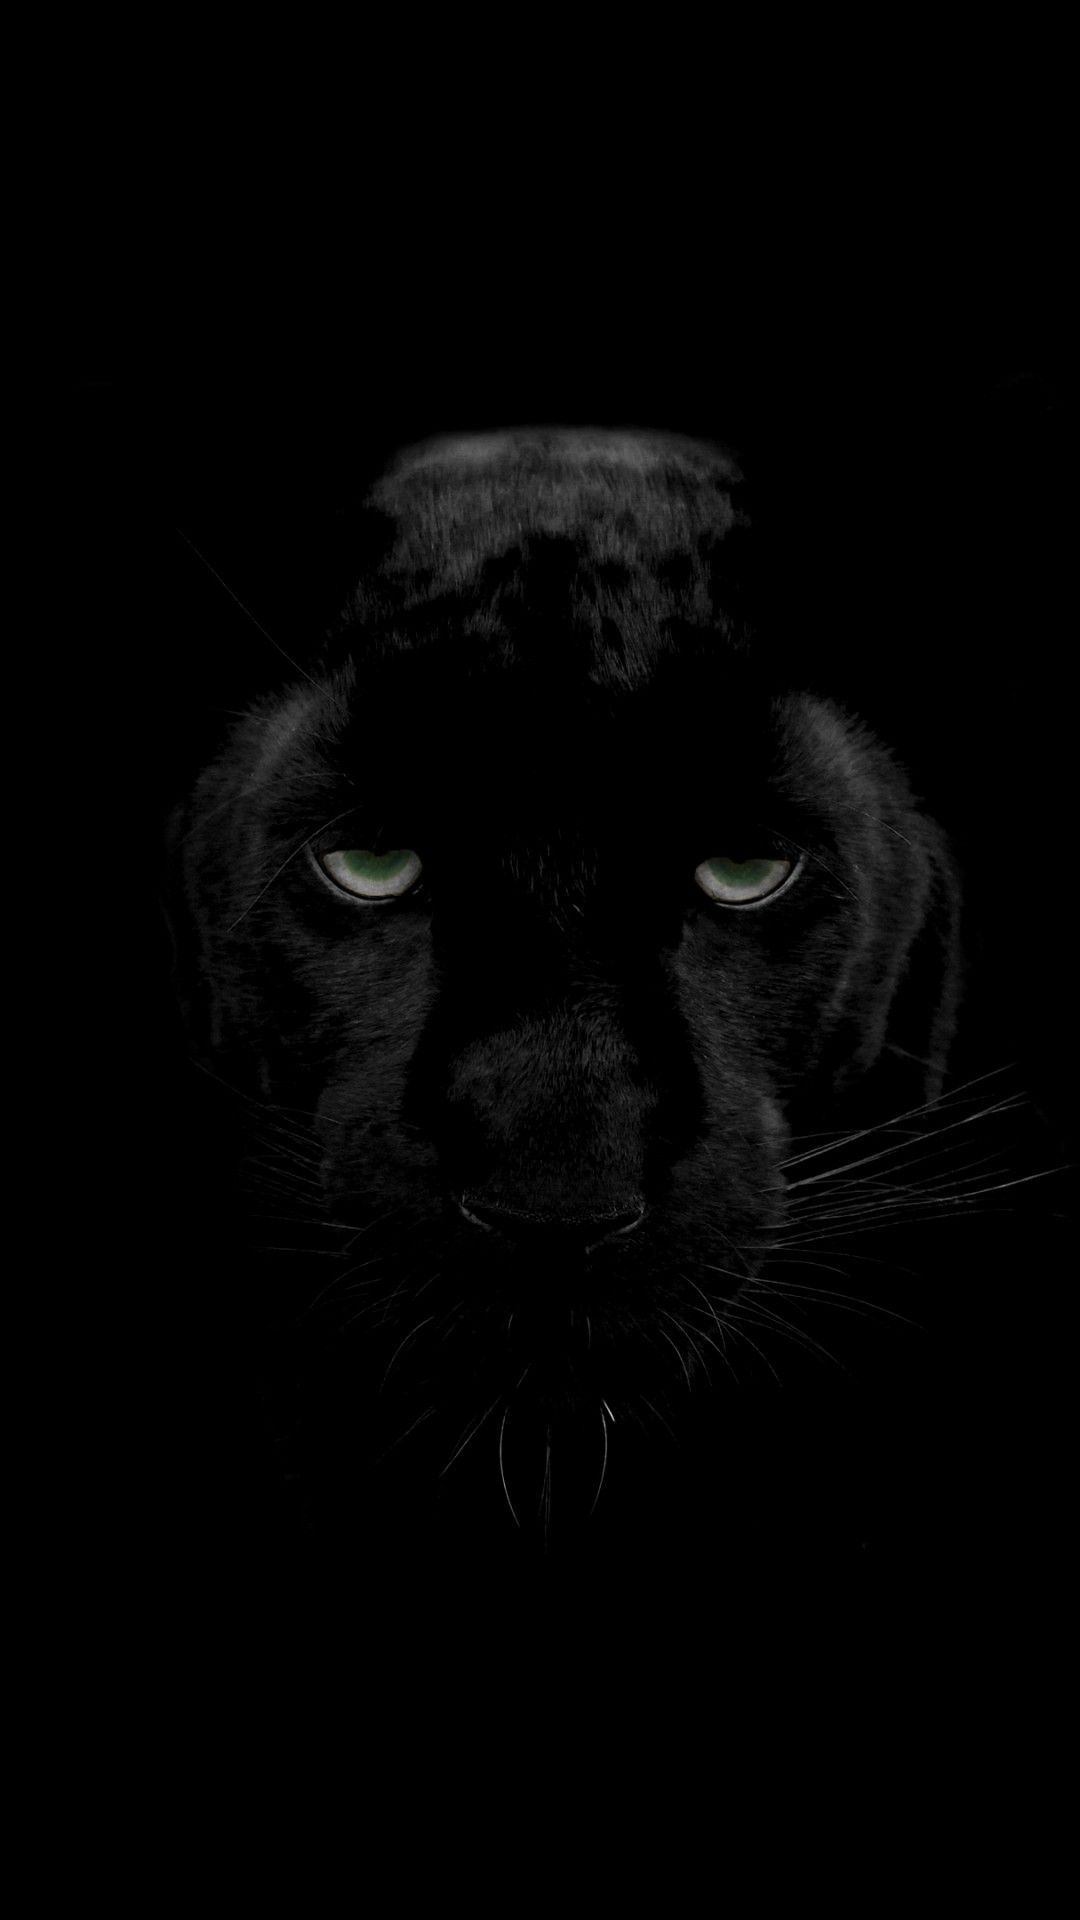 Black Panther Wallpaper 4k iPhoneD Wallpaper. Animal wallpaper, Black panther HD wallpaper, Black wallpaper